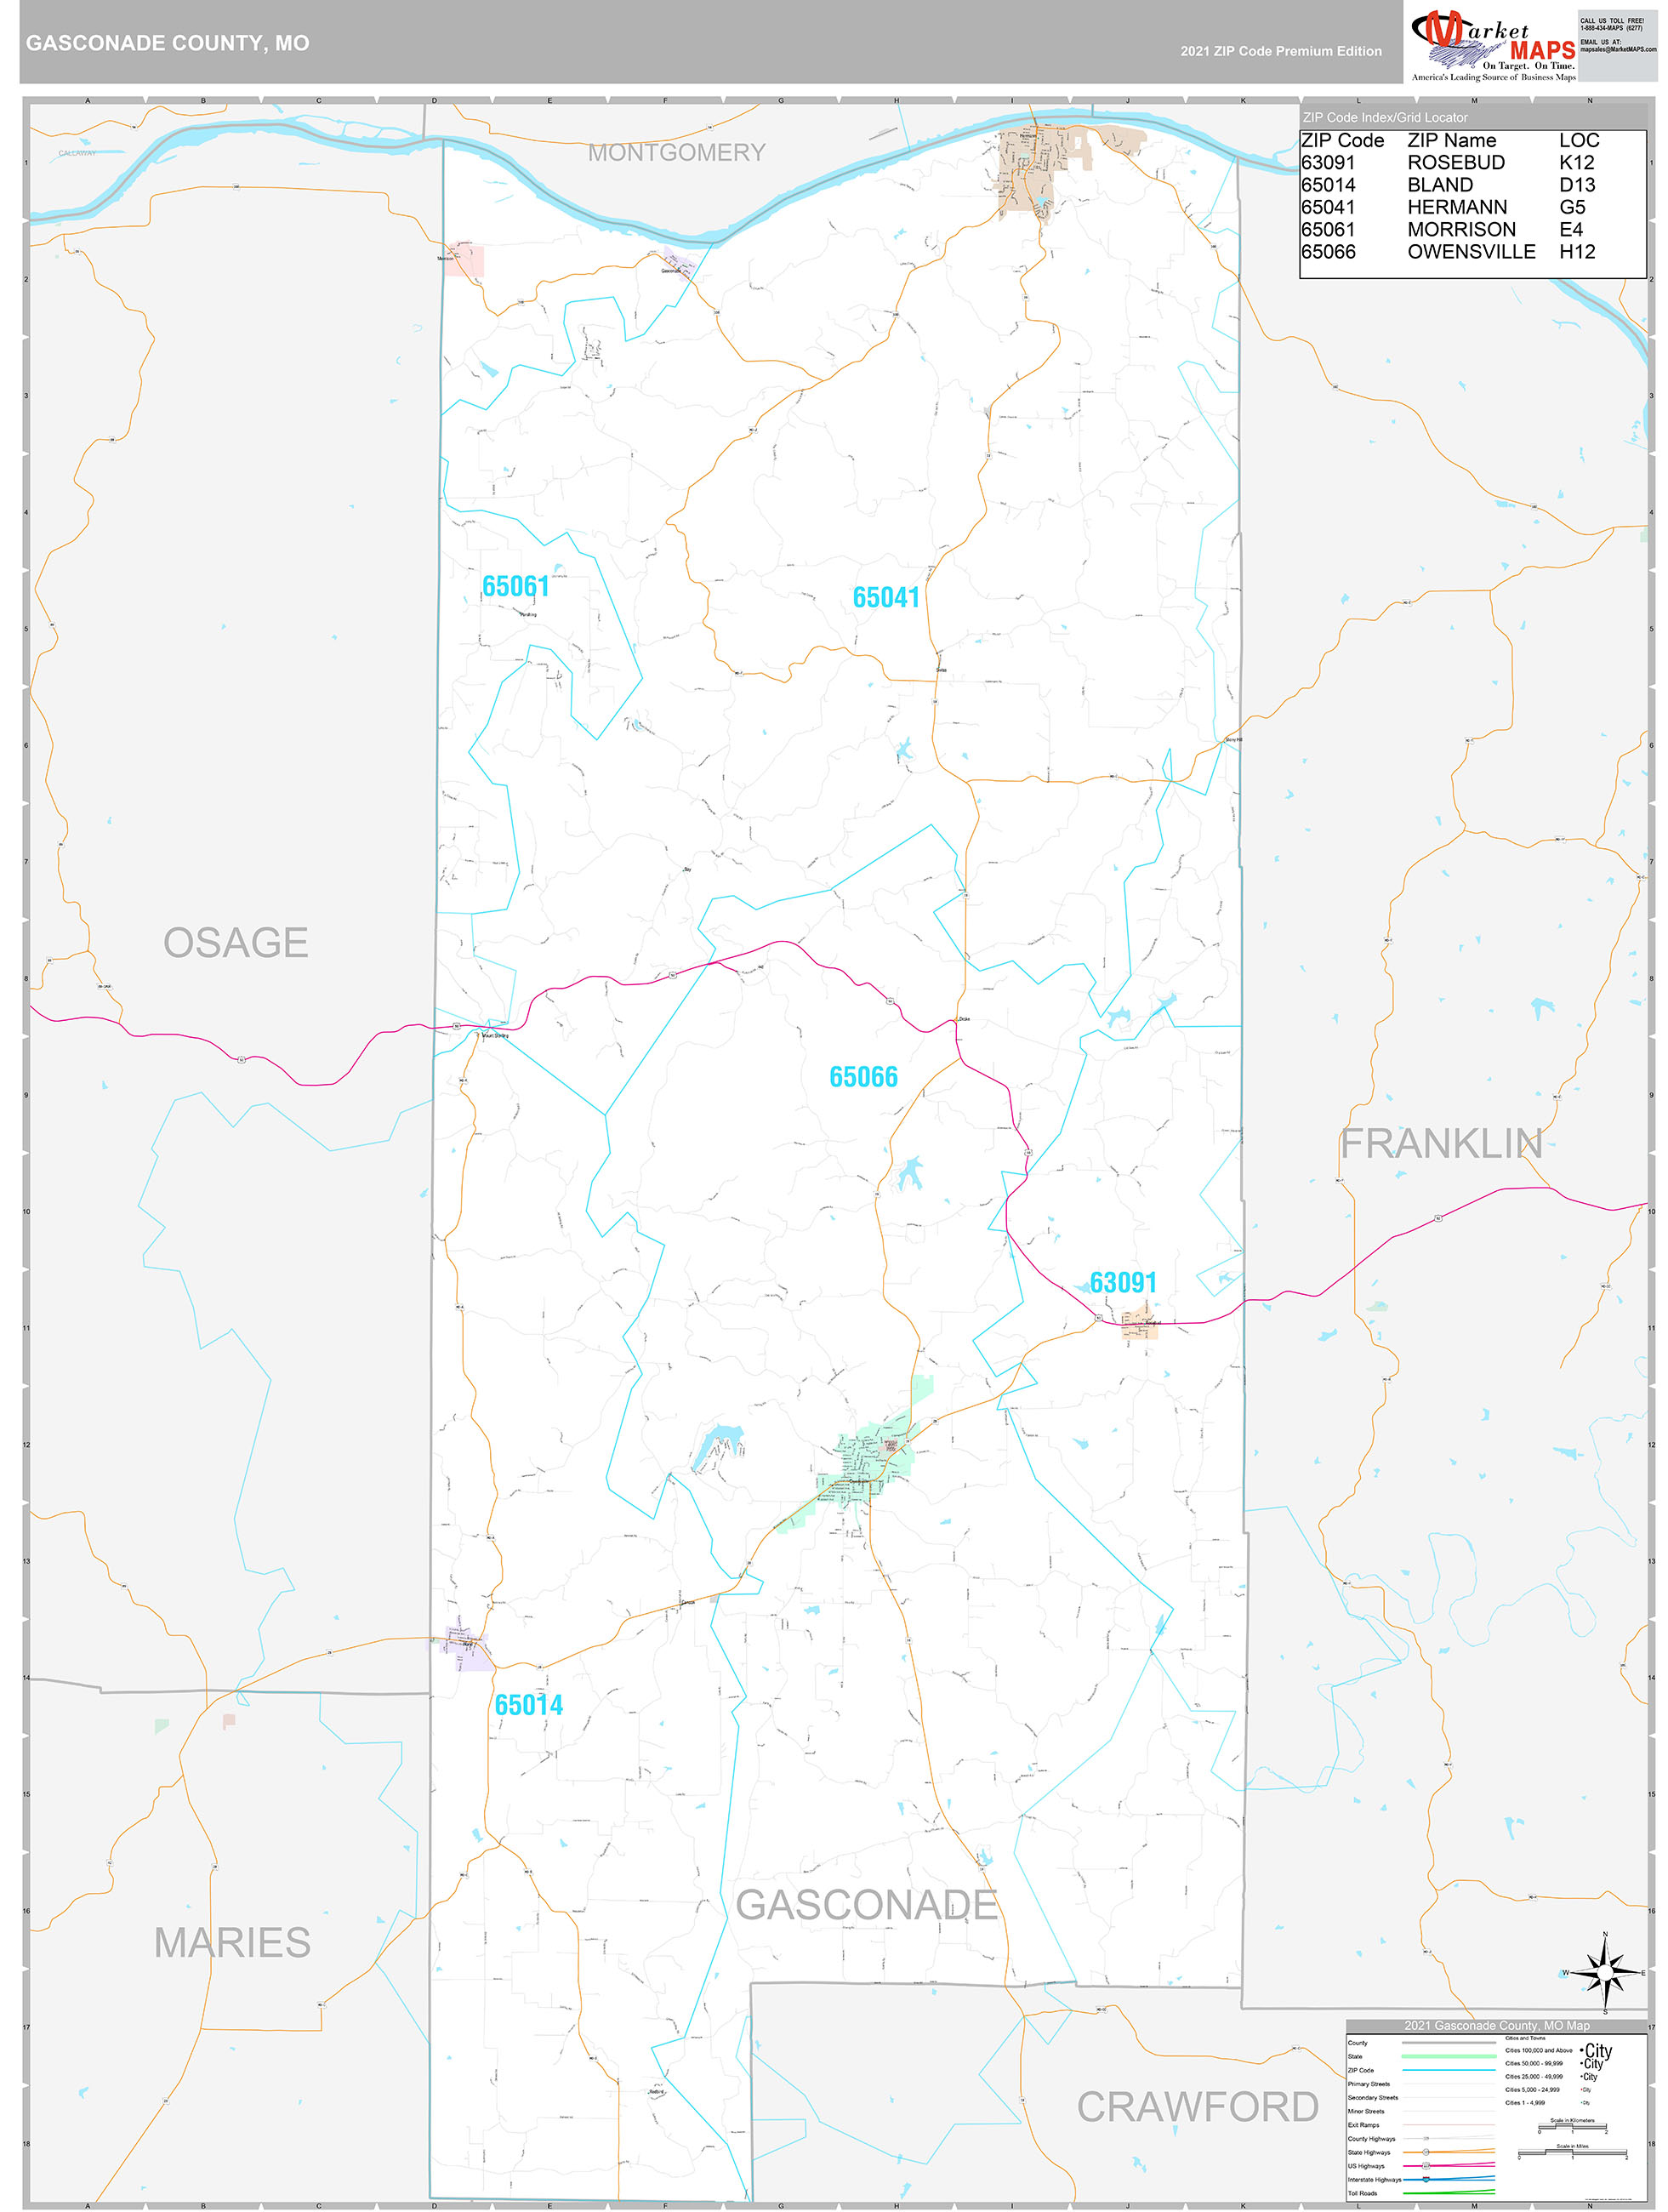 Gasconade County Mo Wall Map Premium Style By Marketmaps 9297